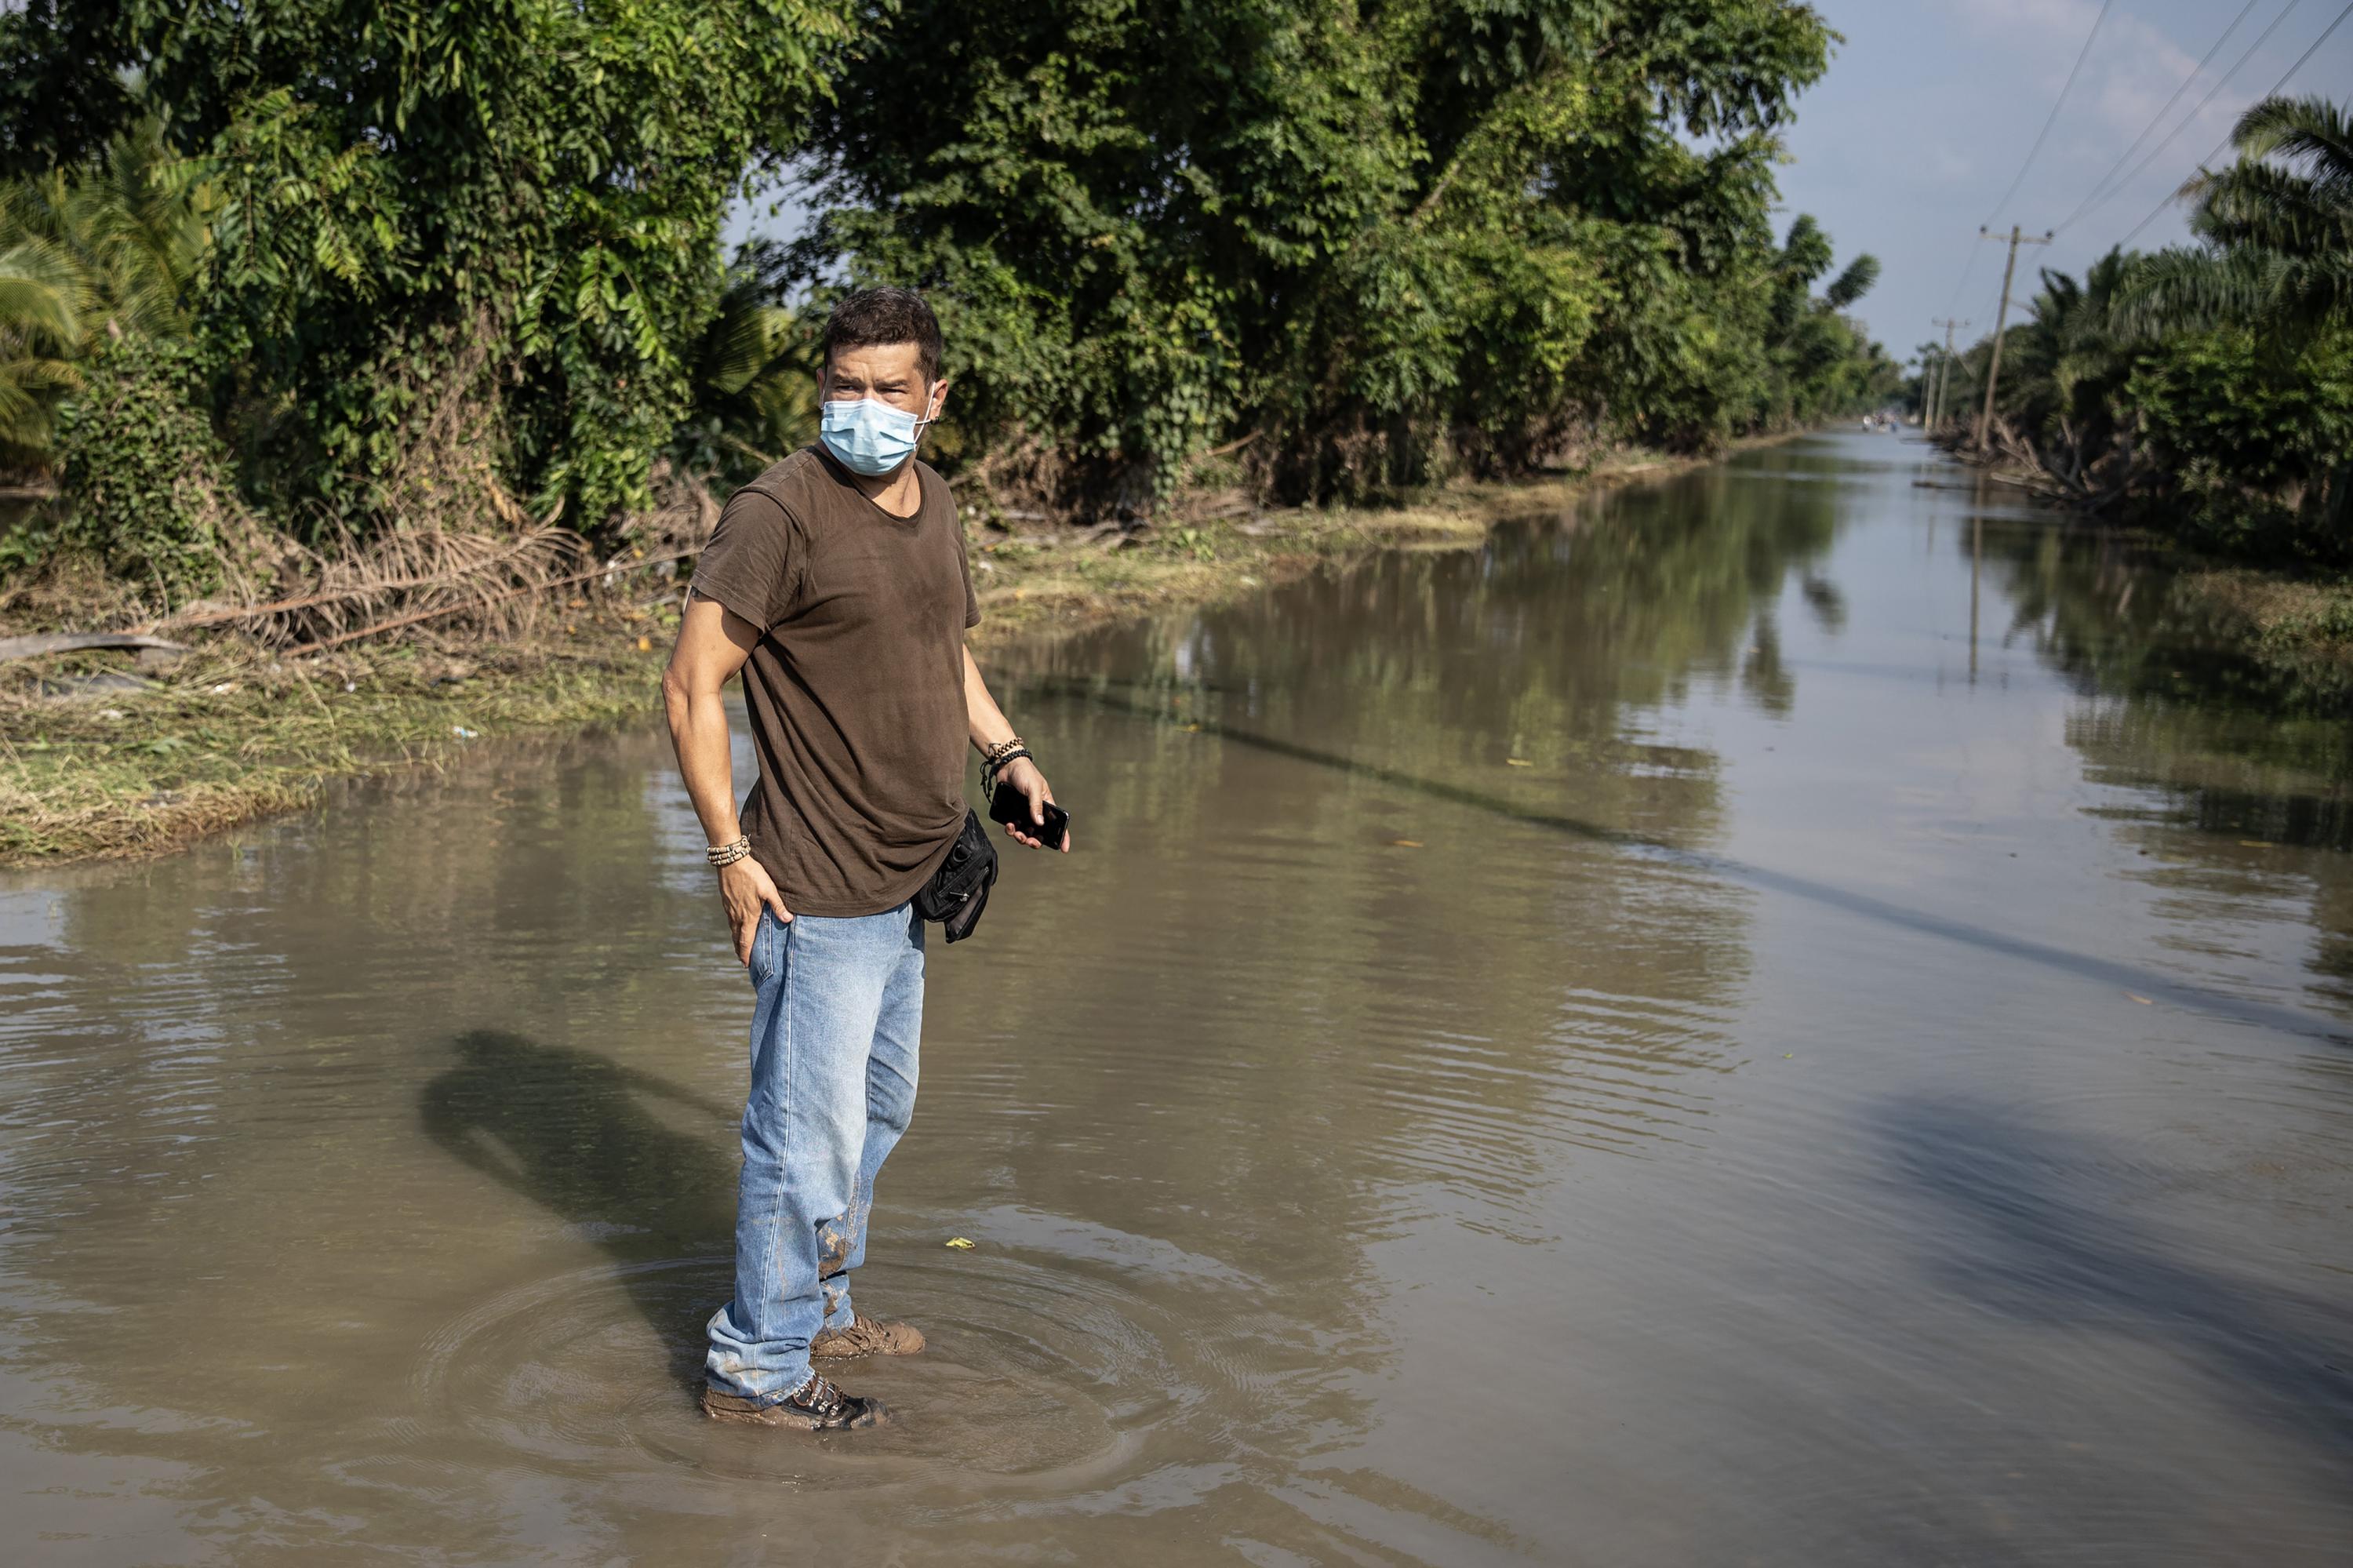 Carlos Martínez covers Hurricanes Eta and Iota along the Honduran coast in 2020, during the Covid-19 pandemic. Photo Carlos Barrera